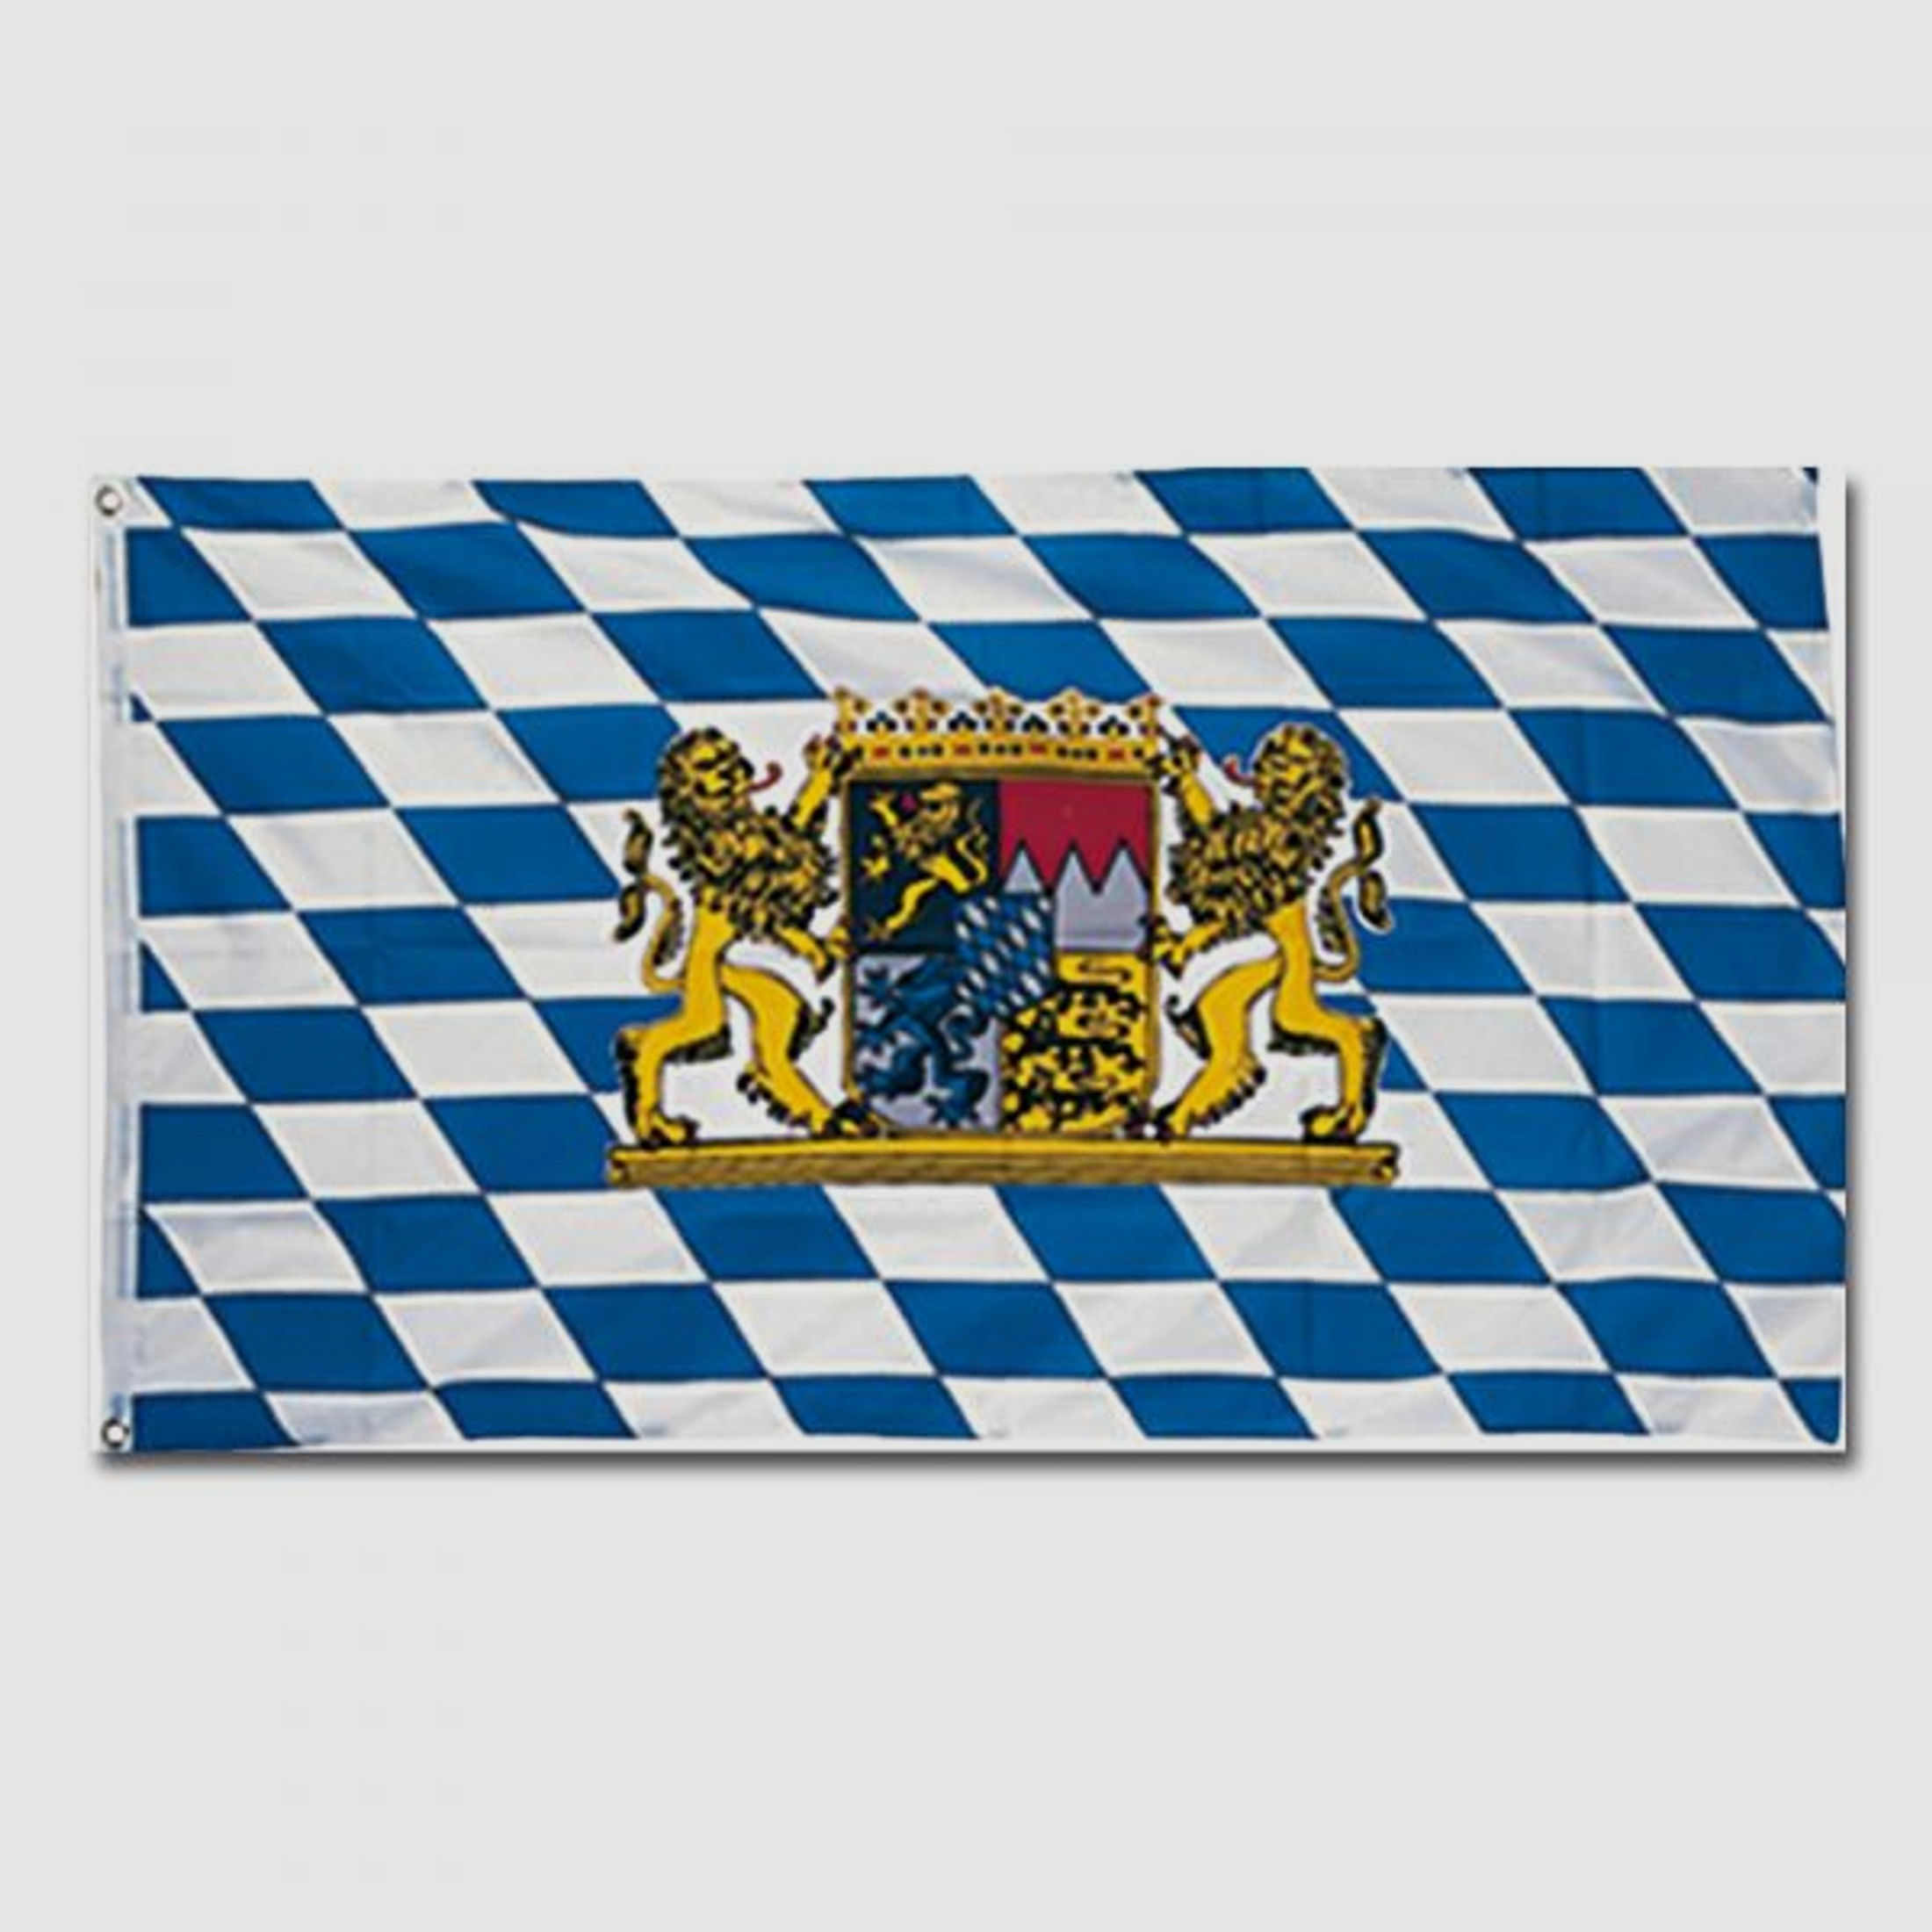 Diverse Flagge Bayern mit Löwen